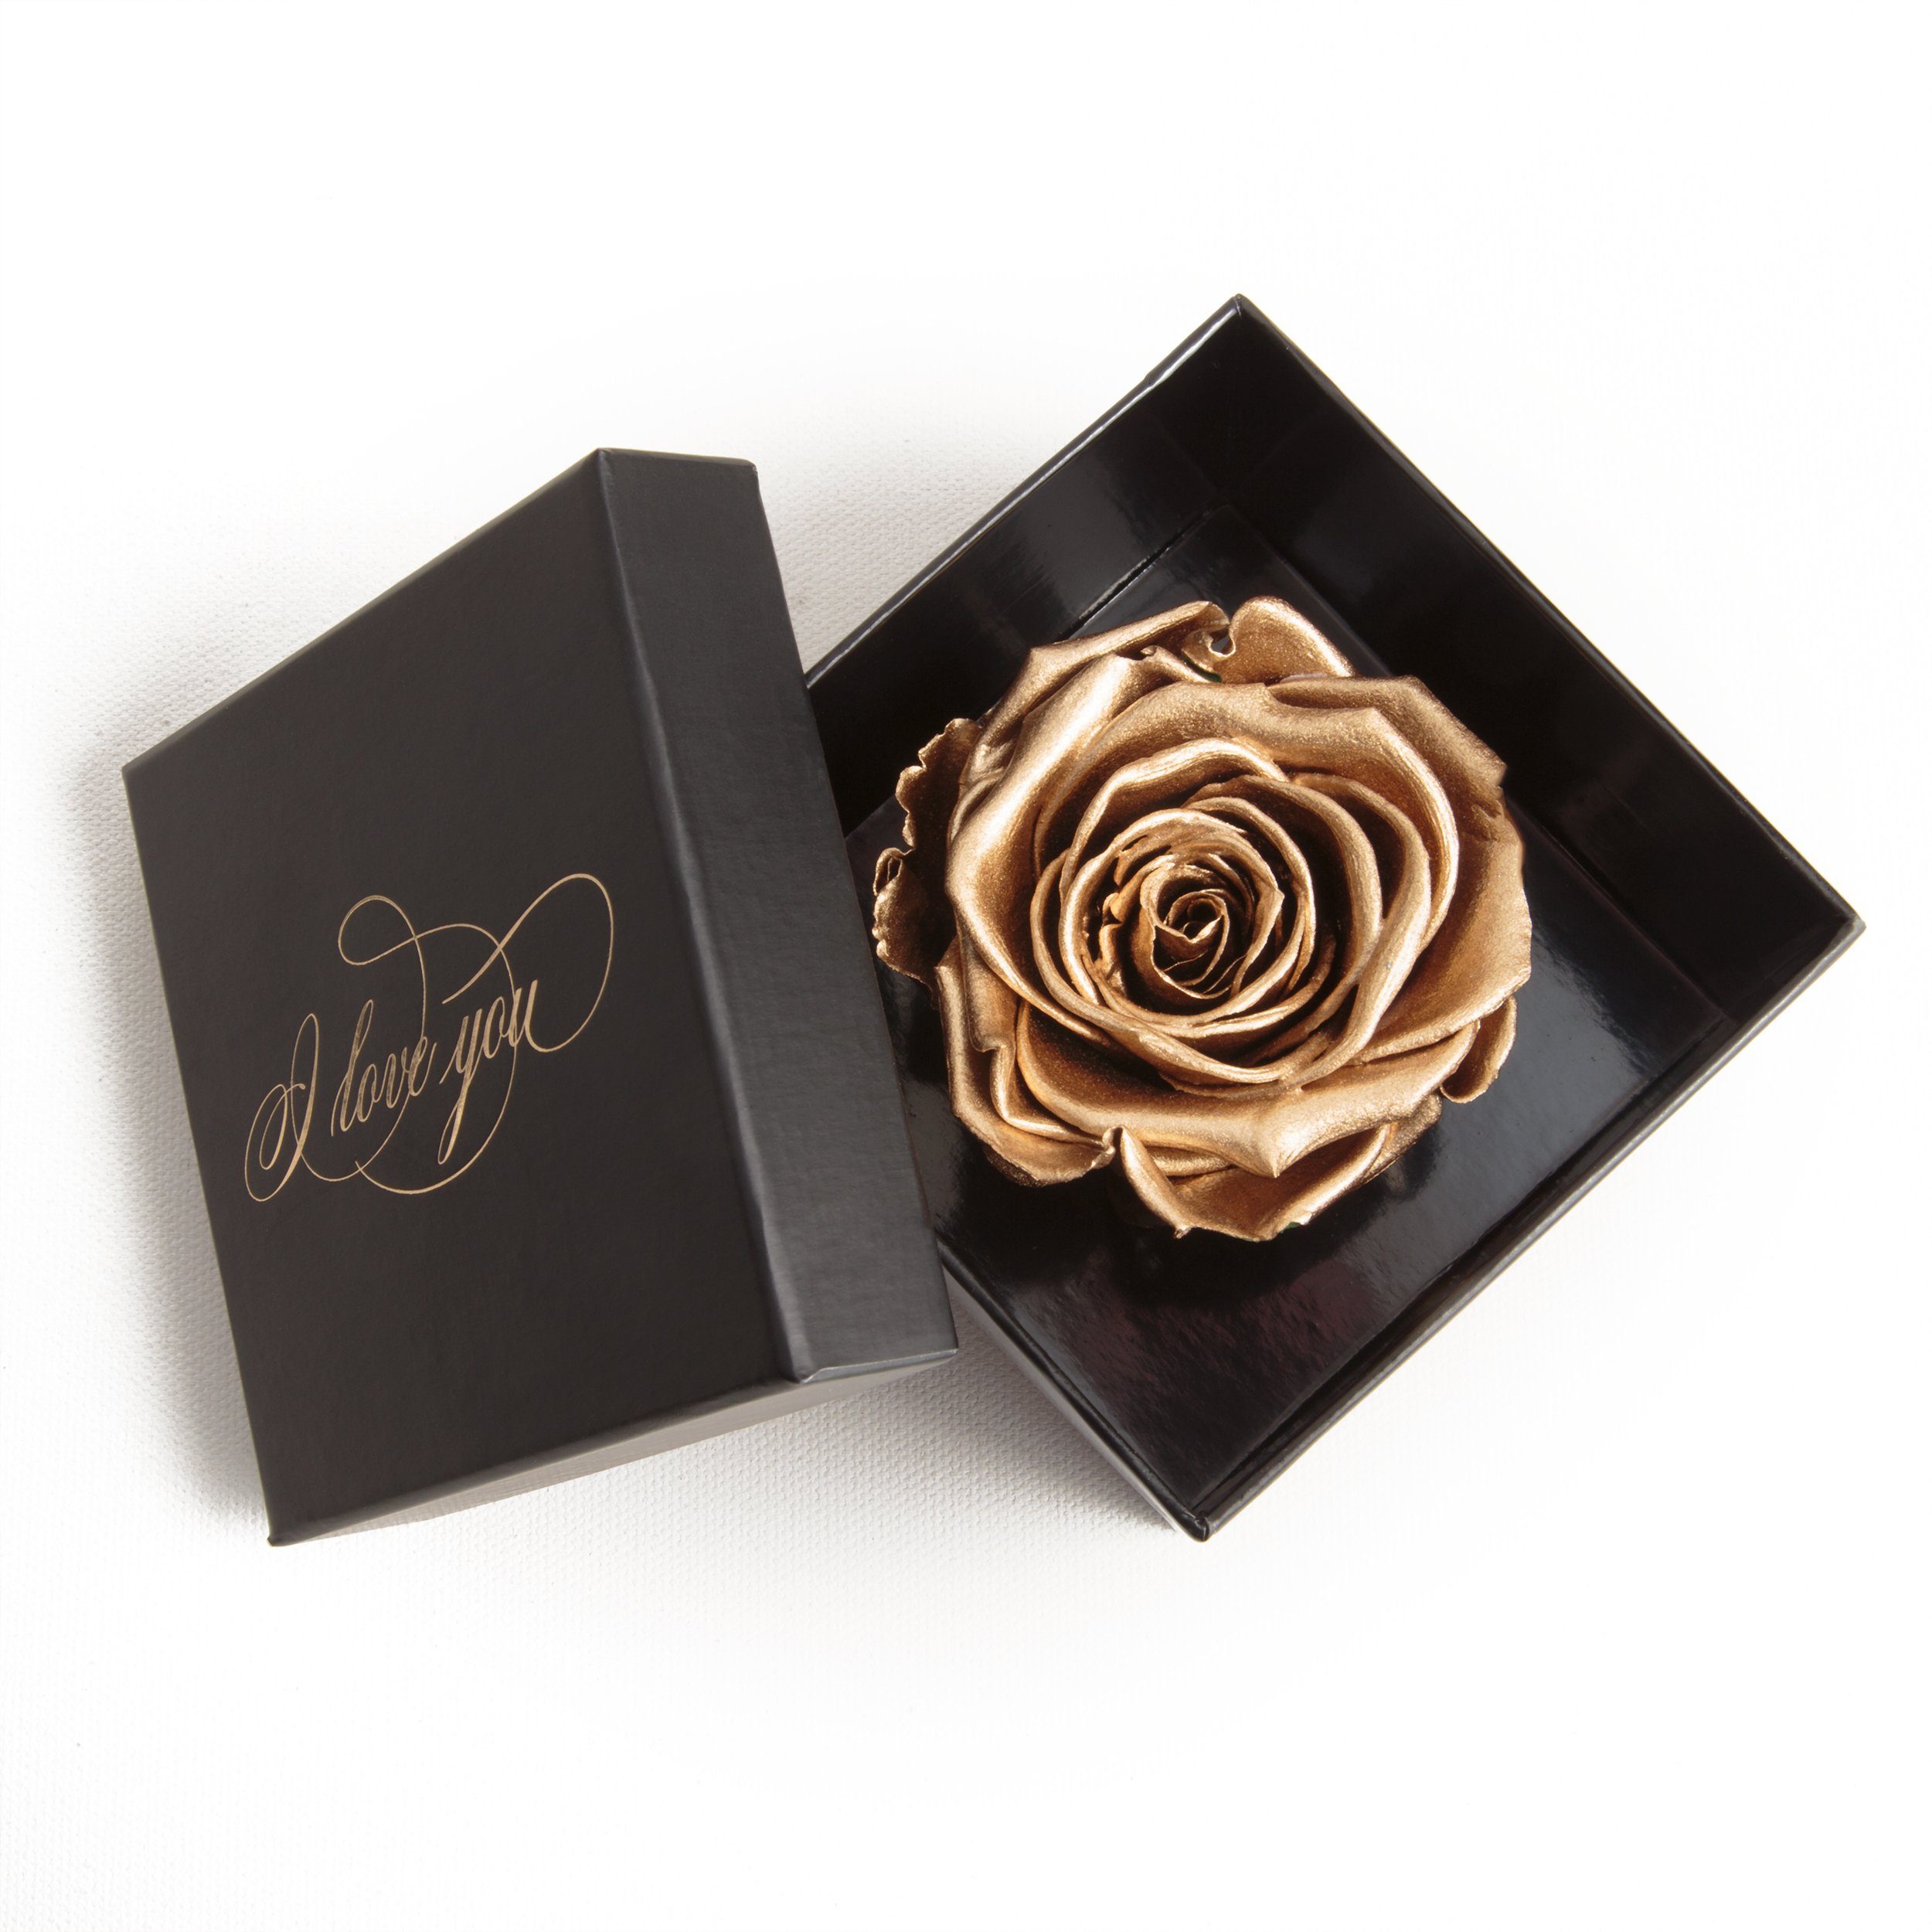 Rose ROSEMARIE Idee SCHULZ Gold Rose, 6 I Geschenk Echte cm, konserviert Infinity Liebesbeweis Höhe Kunstblume You Love Heidelberg, Rose Box